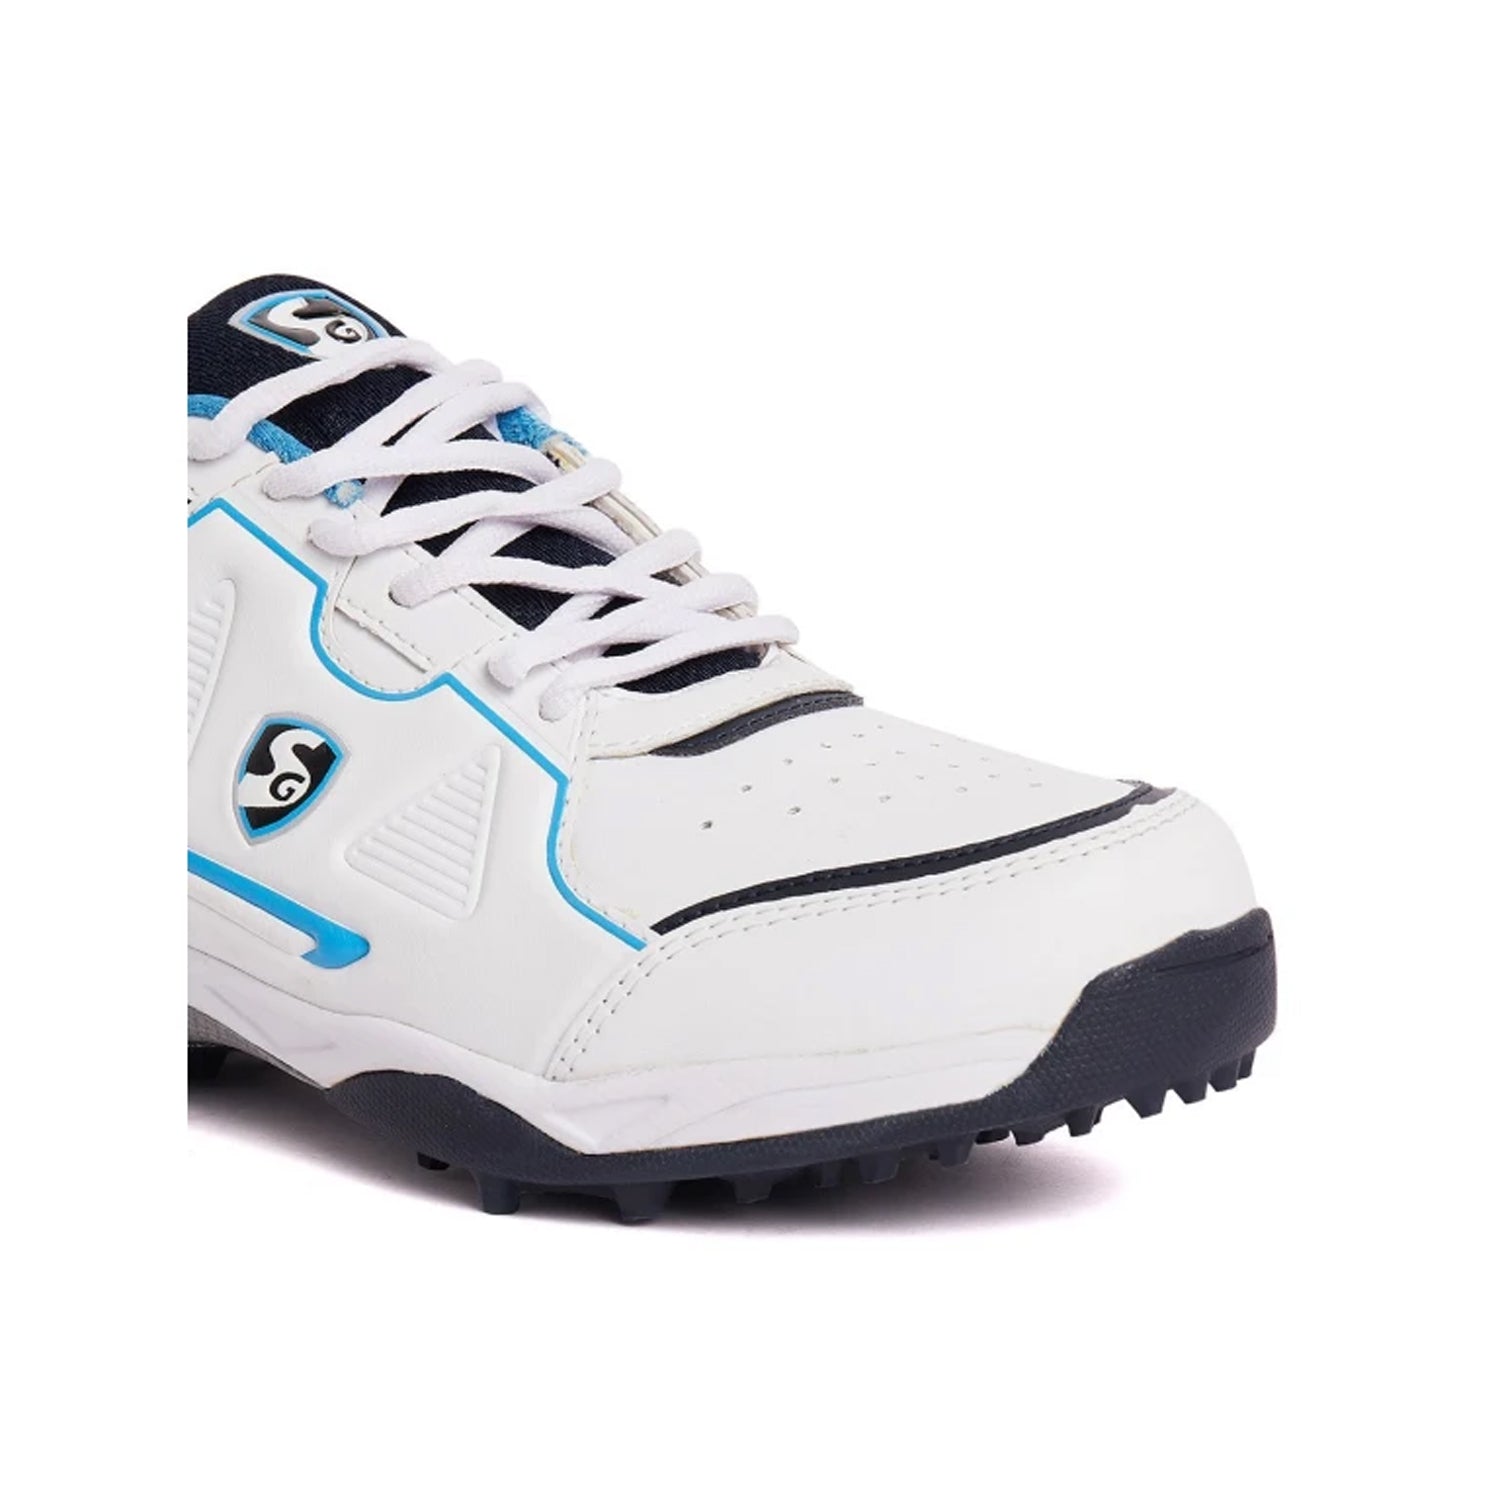 SG Club 5.0 Rubber Spikes Cricket Shoes - Best Price online Prokicksports.com